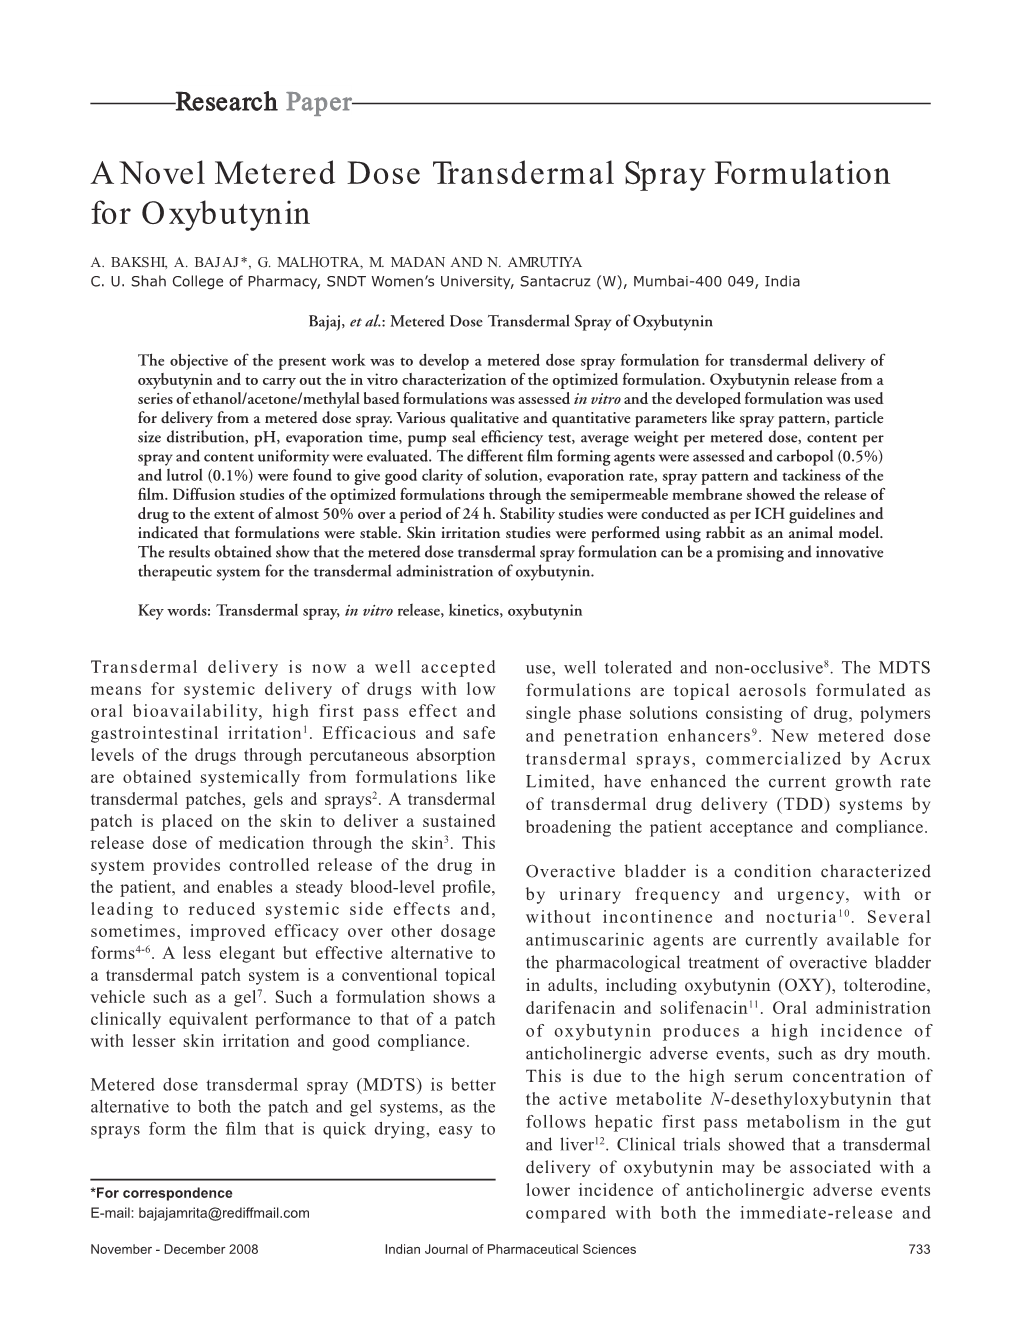 A Novel Metered Dose Transdermal Spray Formulation for Oxybutynin